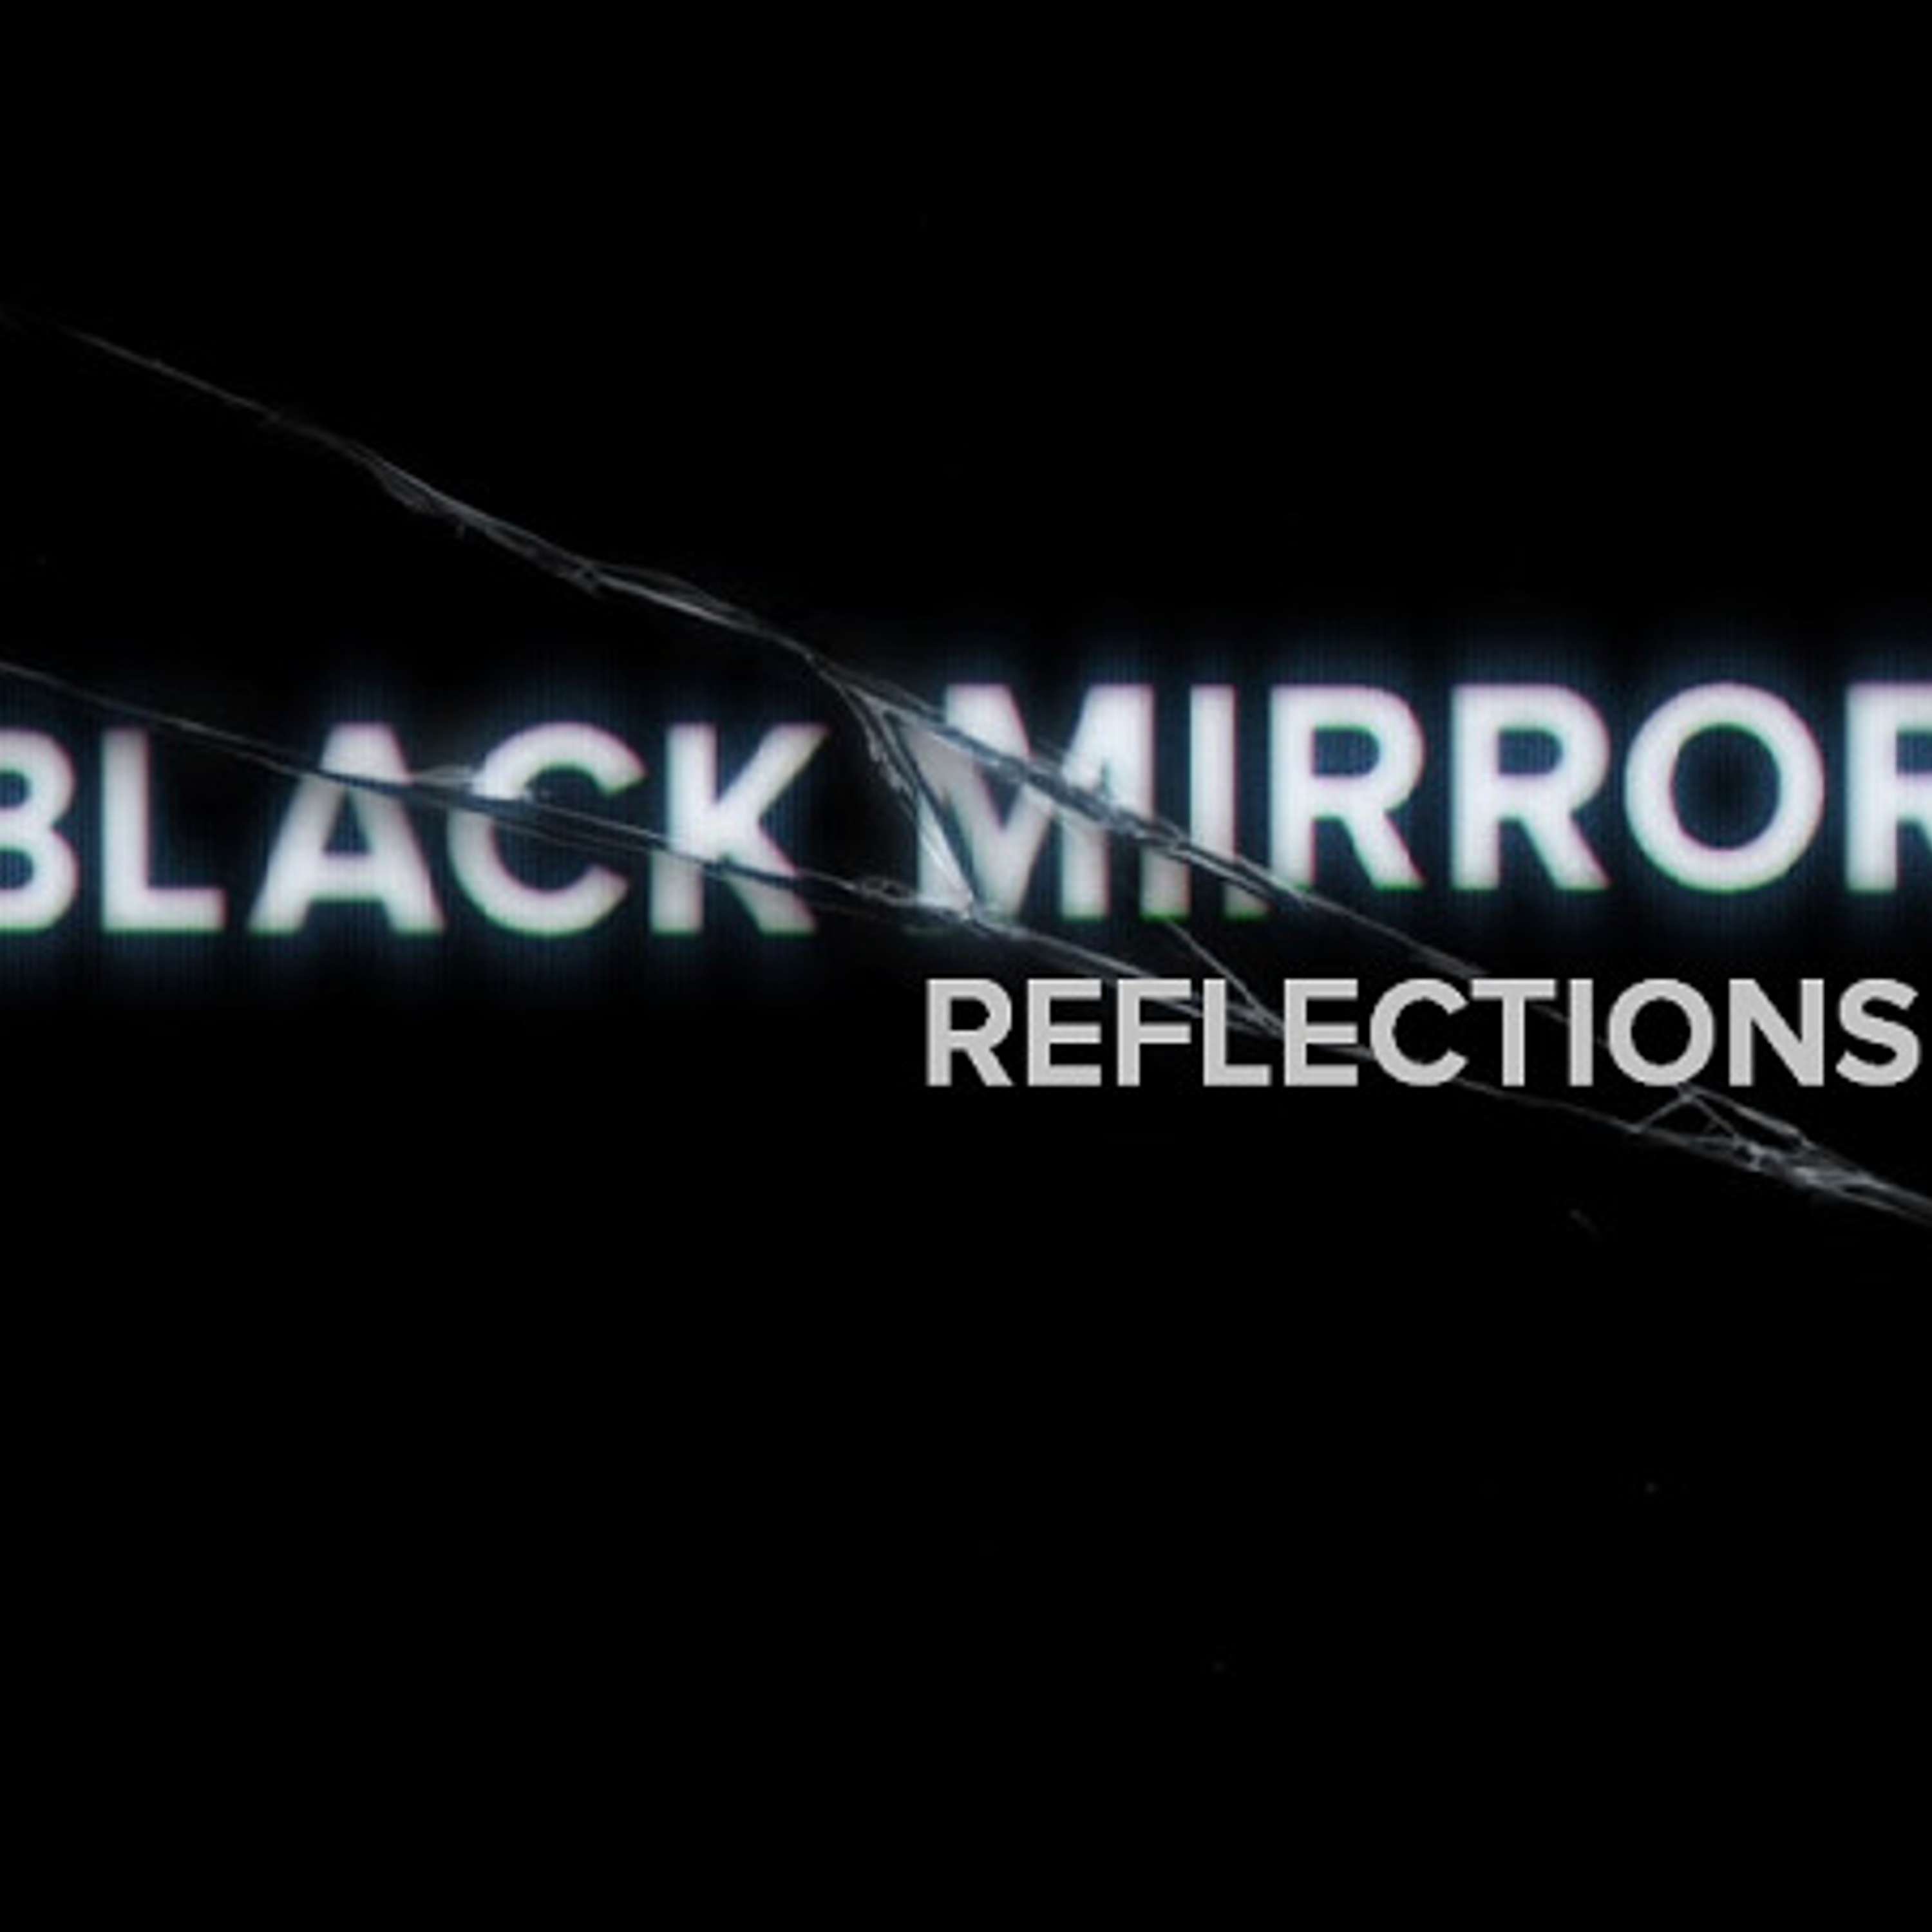 BLACK MIRROR REFLECTIONS Image